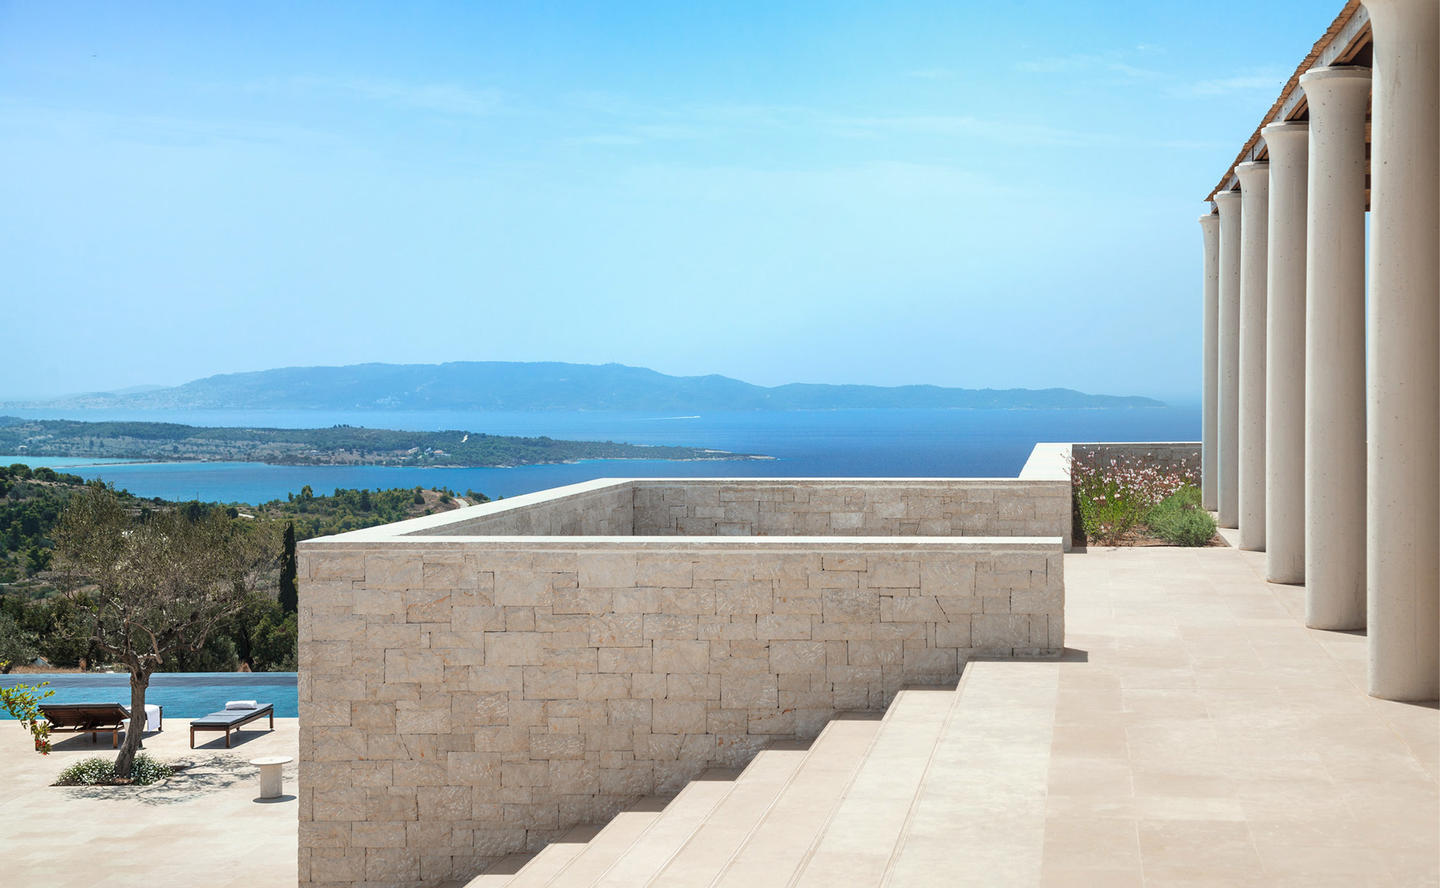 Stairs & View over Aegean, Five-Bedroom Villa - Amanzoe, Greece